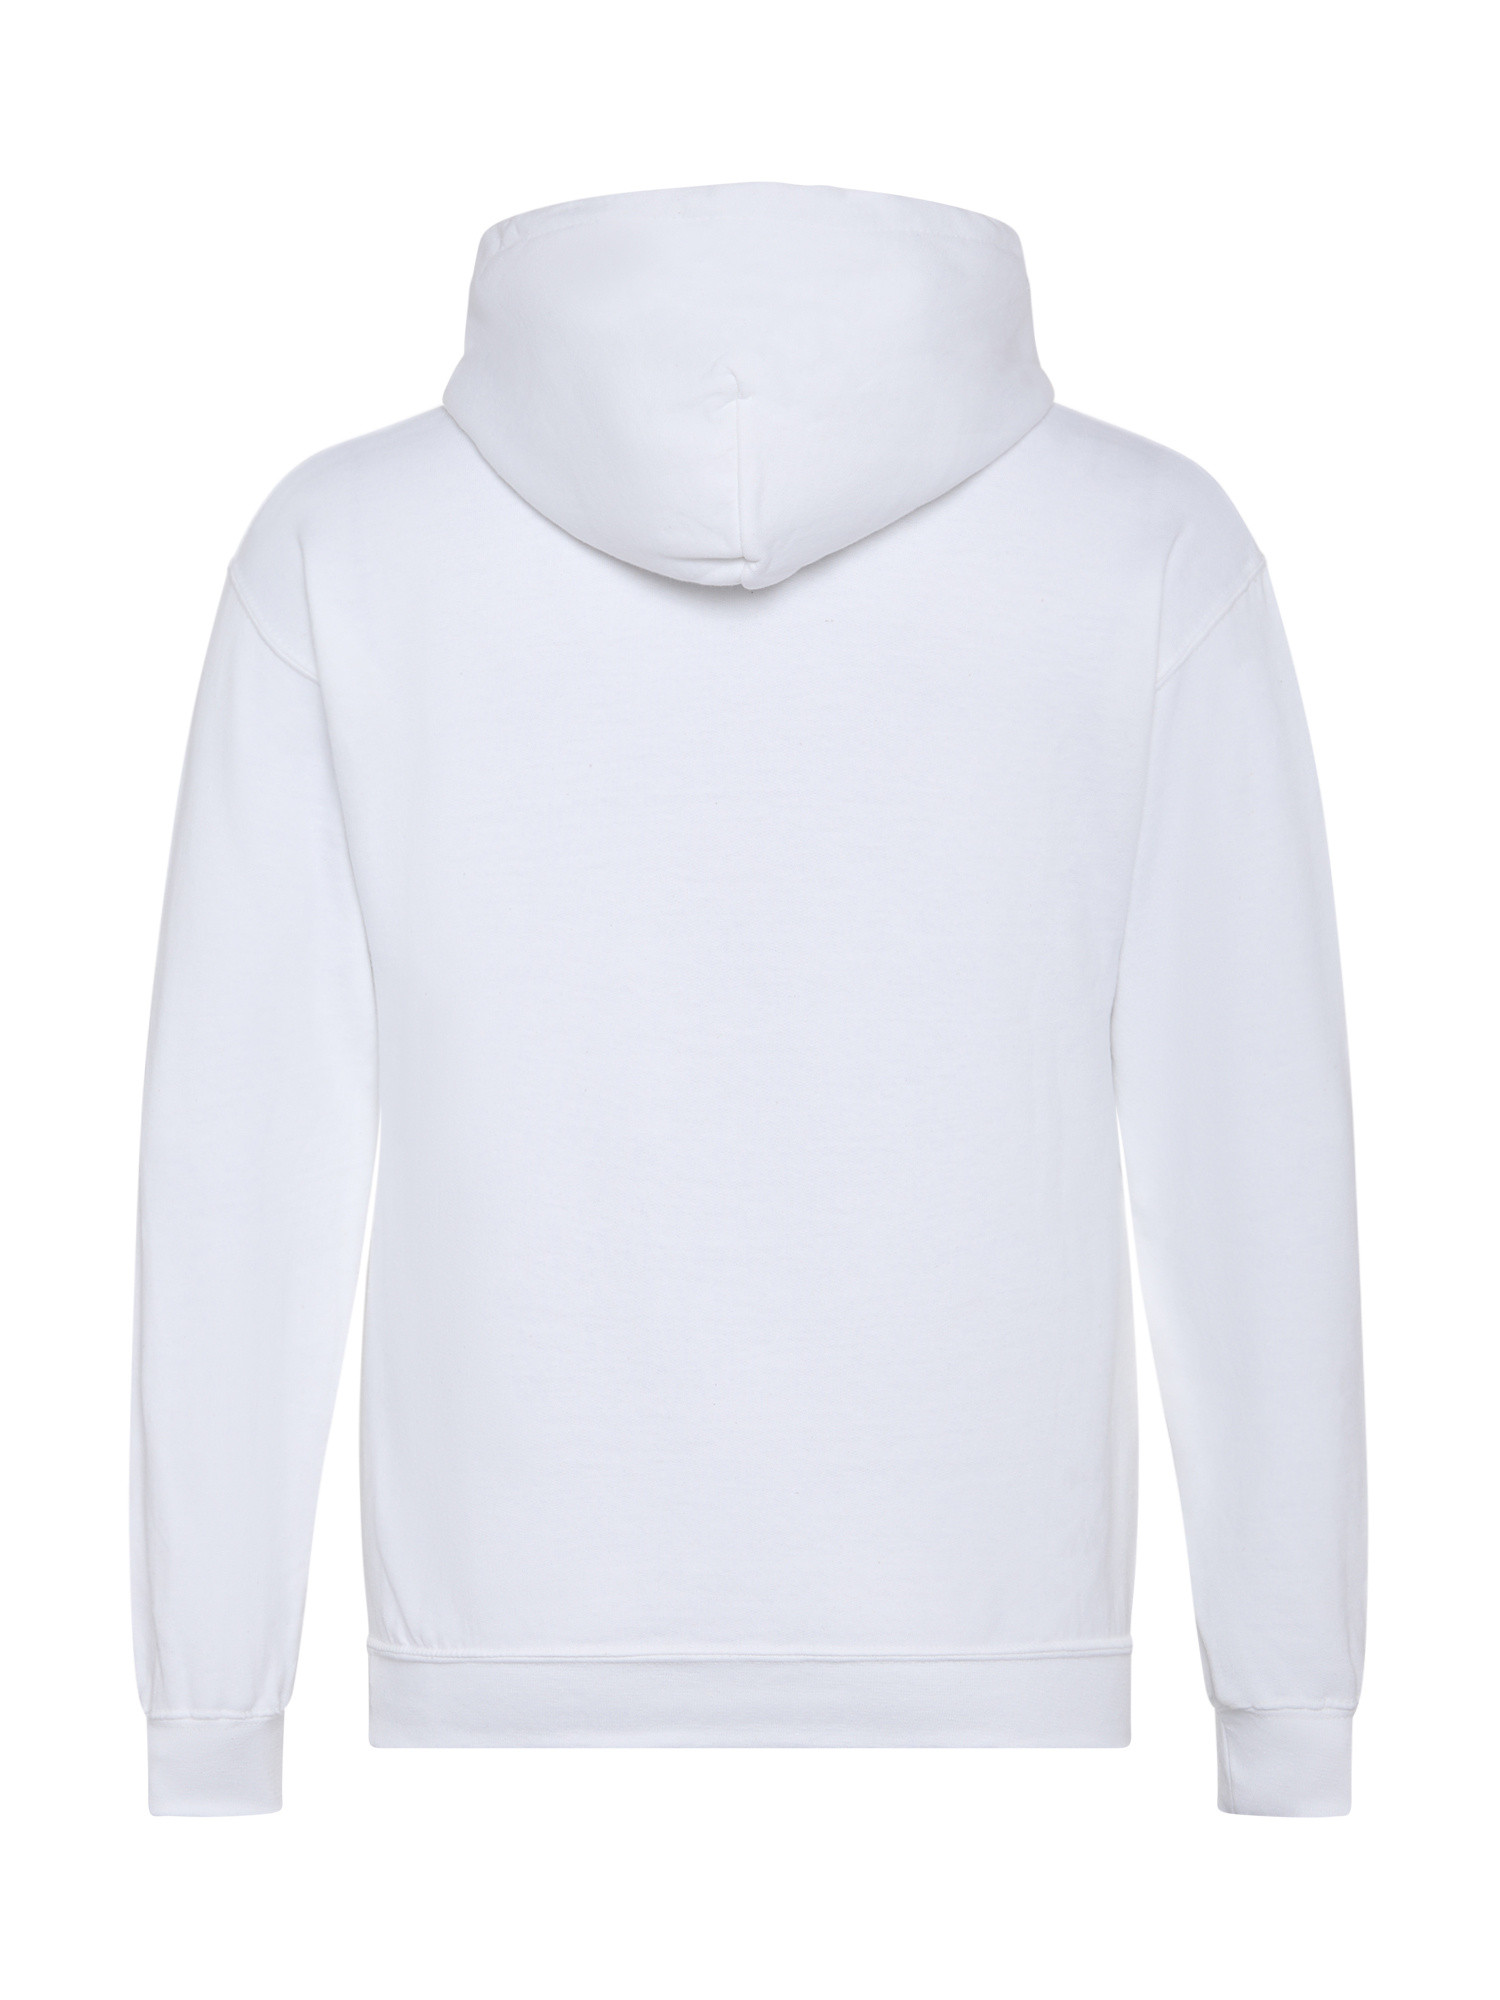 Thrasher - Skate magazine logo hoodie, White, large image number 1